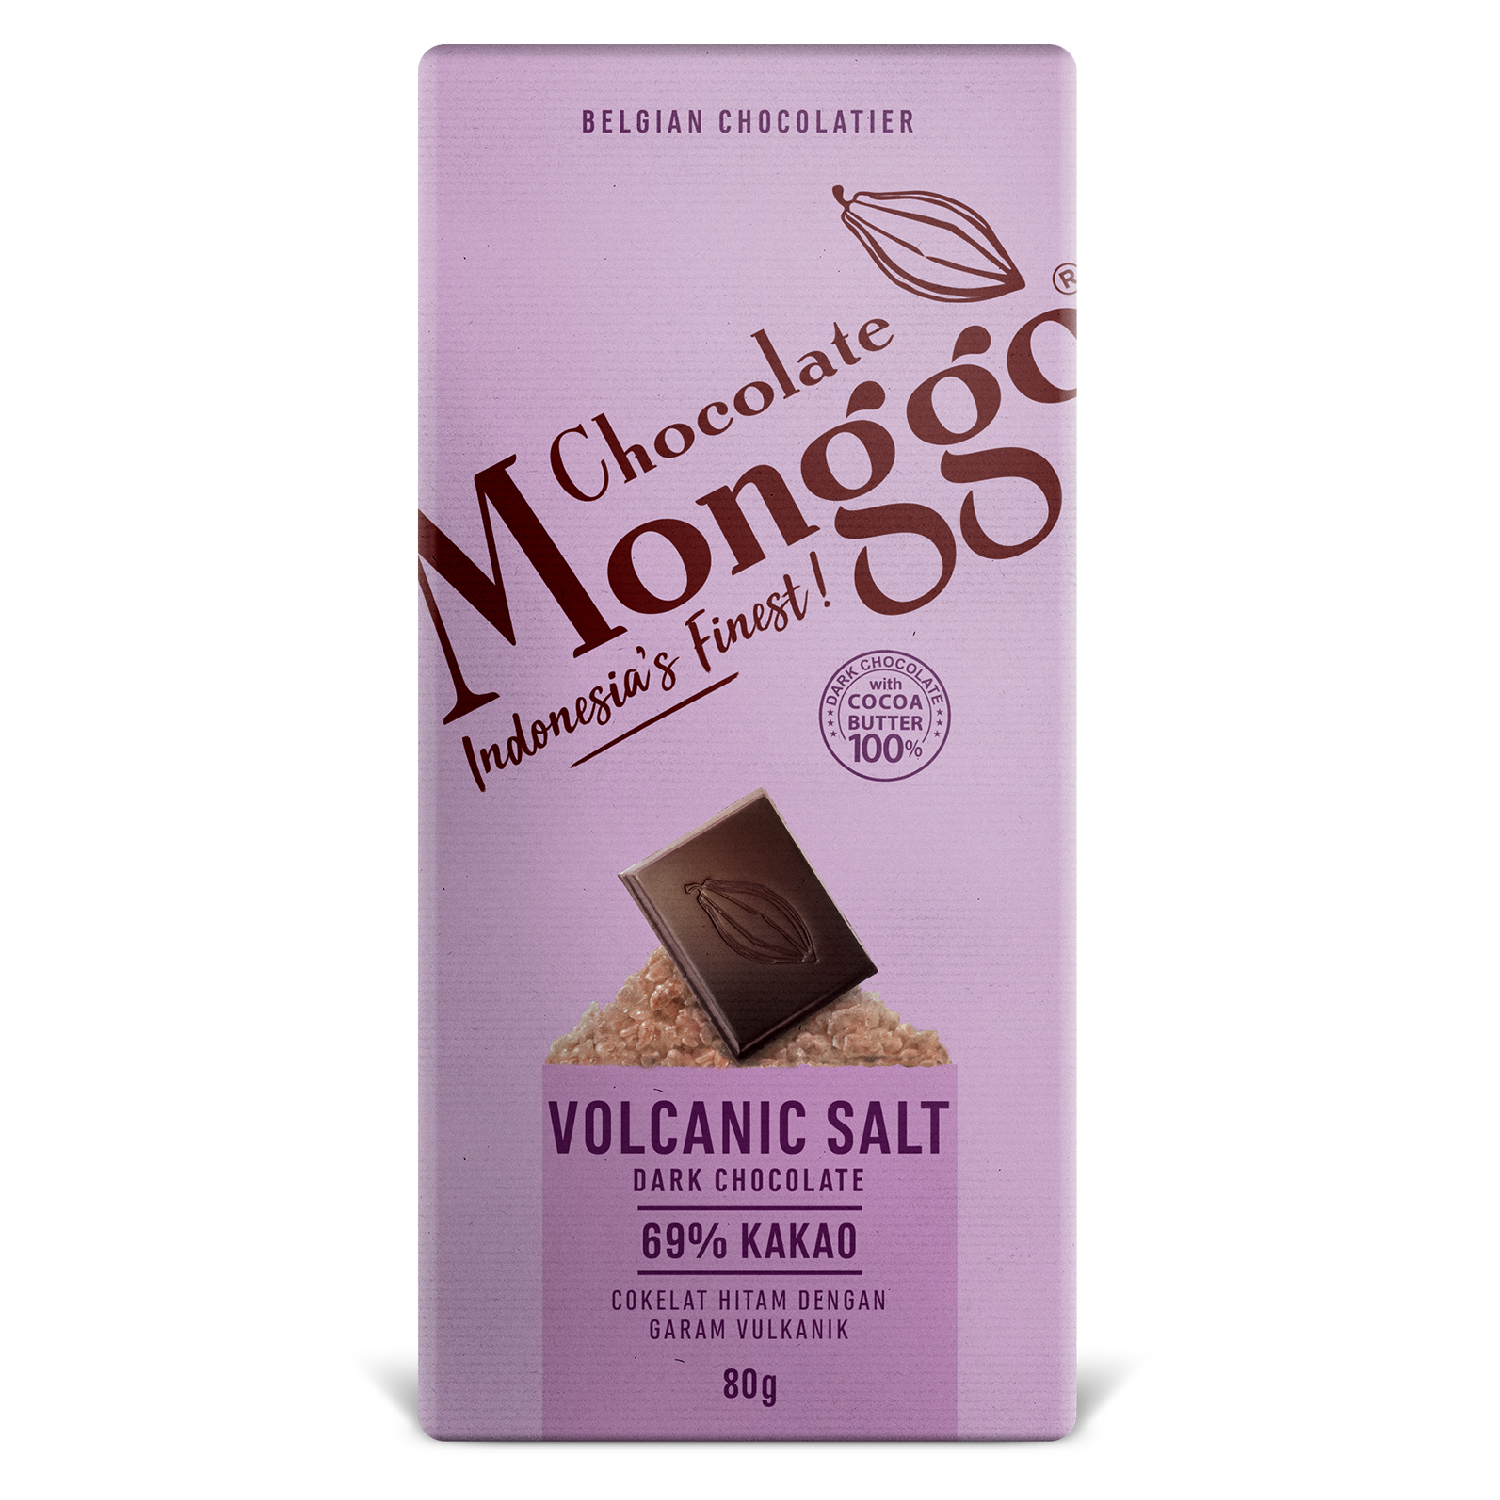 CHOCOLATE TABLET WITH VOLCANIC SALT